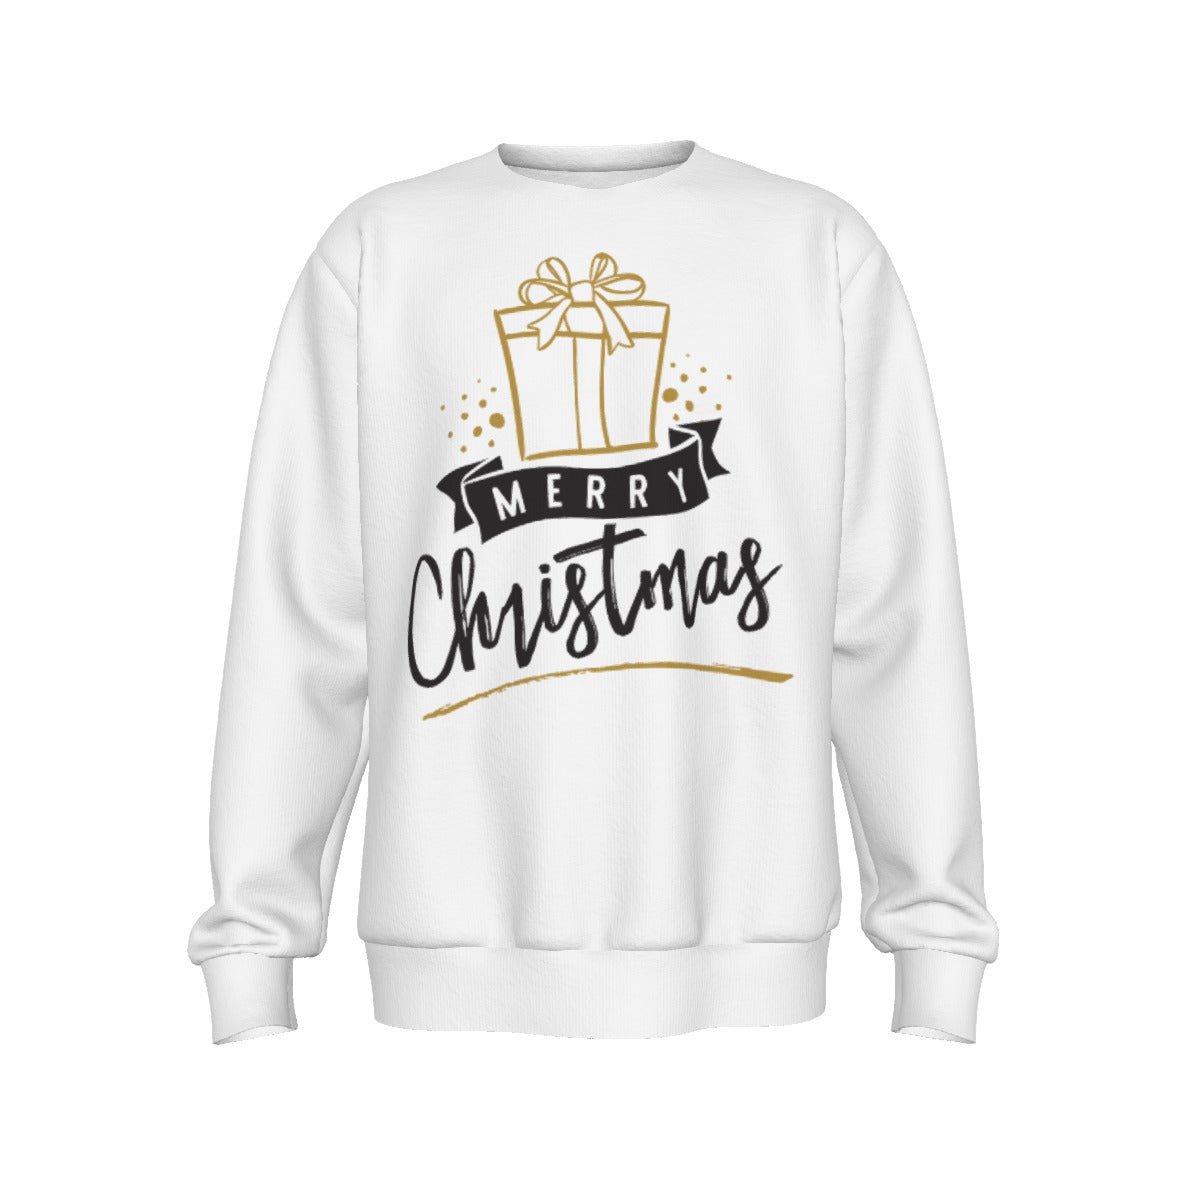 Men's Christmas Sweater - Merry Christmas - Gold Present - Festive Style